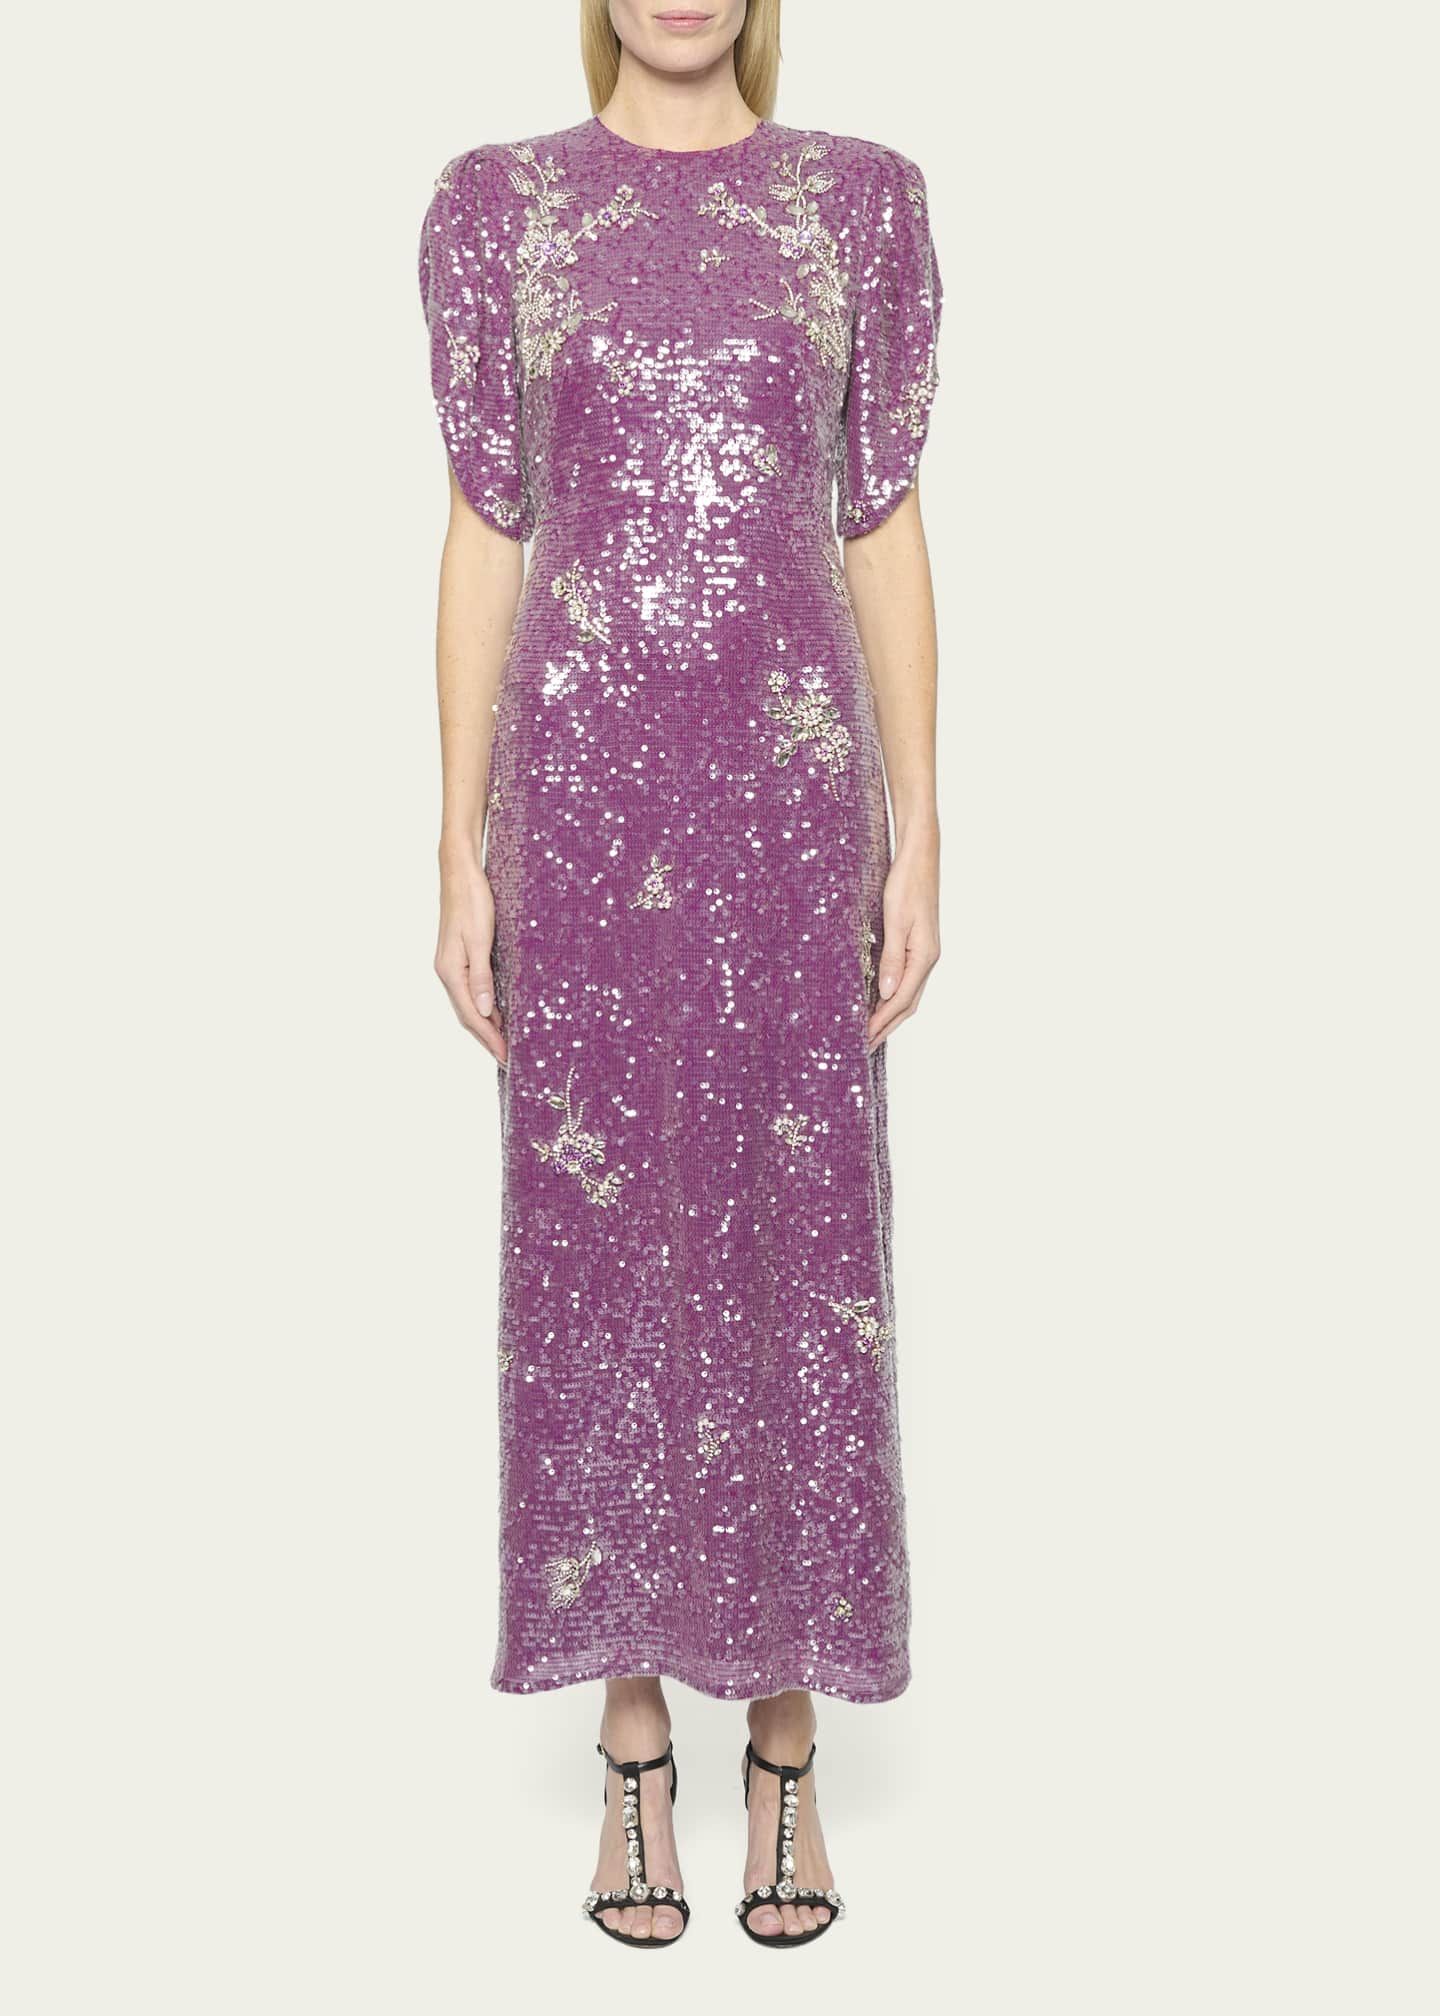 Erdem Sequin-Embellished Beaded Dress | Bergdorf Goodman